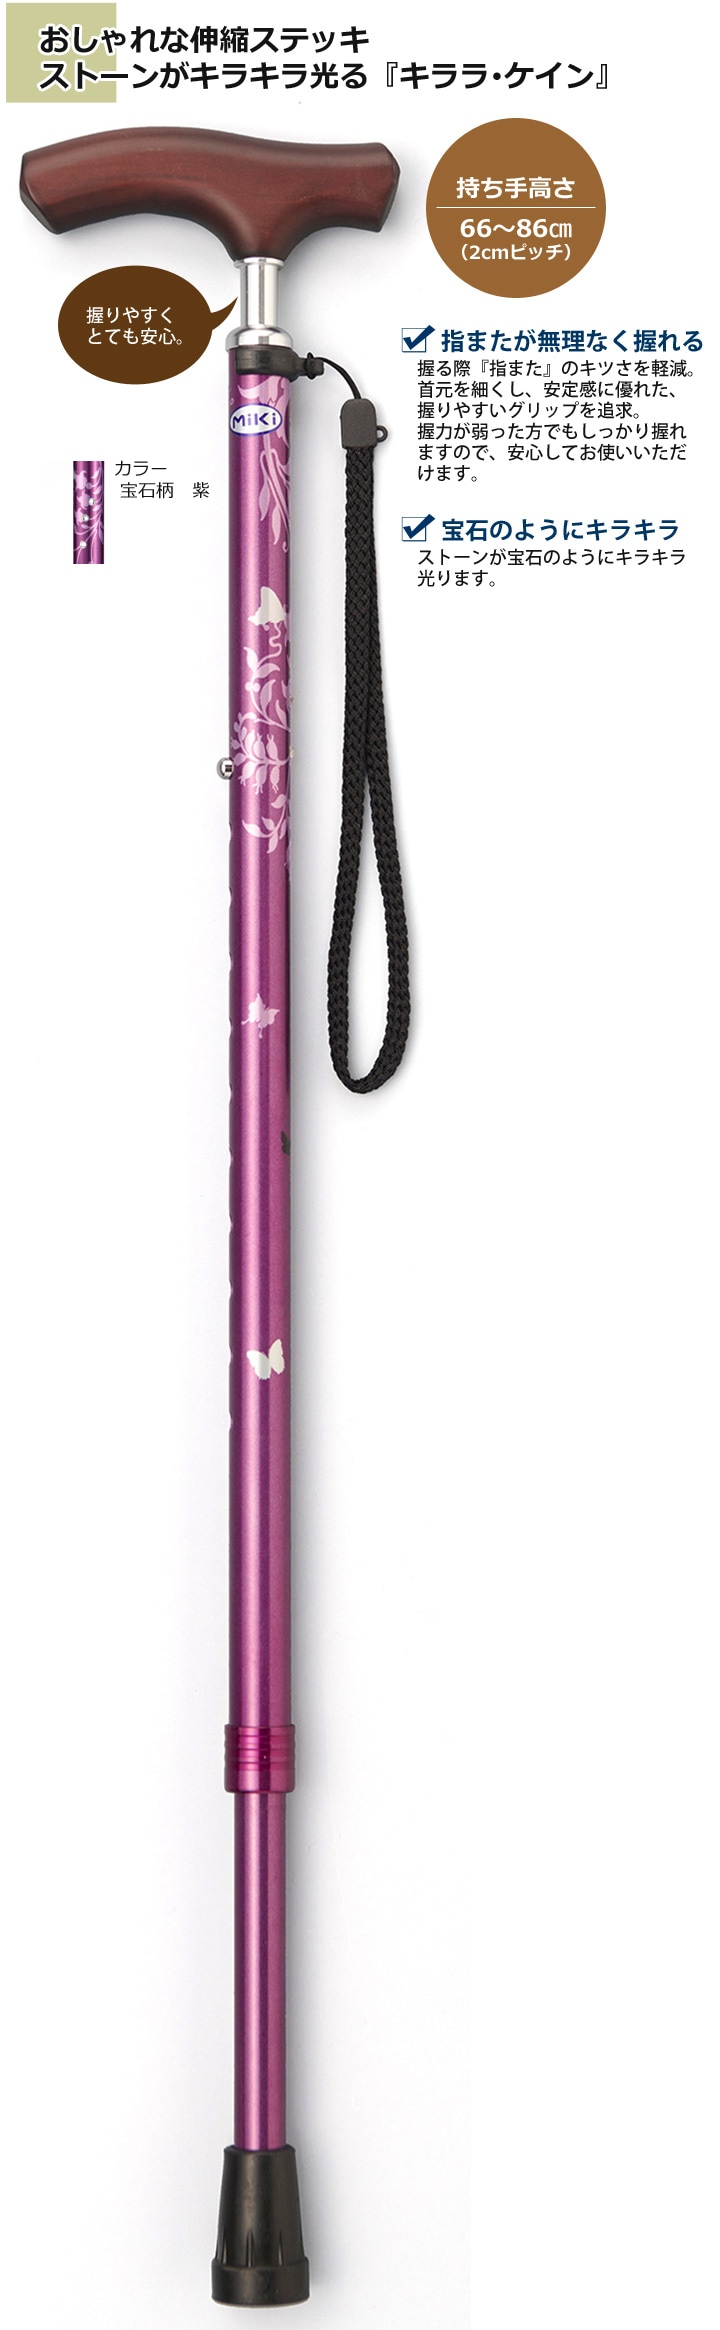 MRZ-17007 キララ・ケイン　スリムネック伸縮杖 [宝石柄 紫]-シルバーカー・歩行用品通販のロッキー